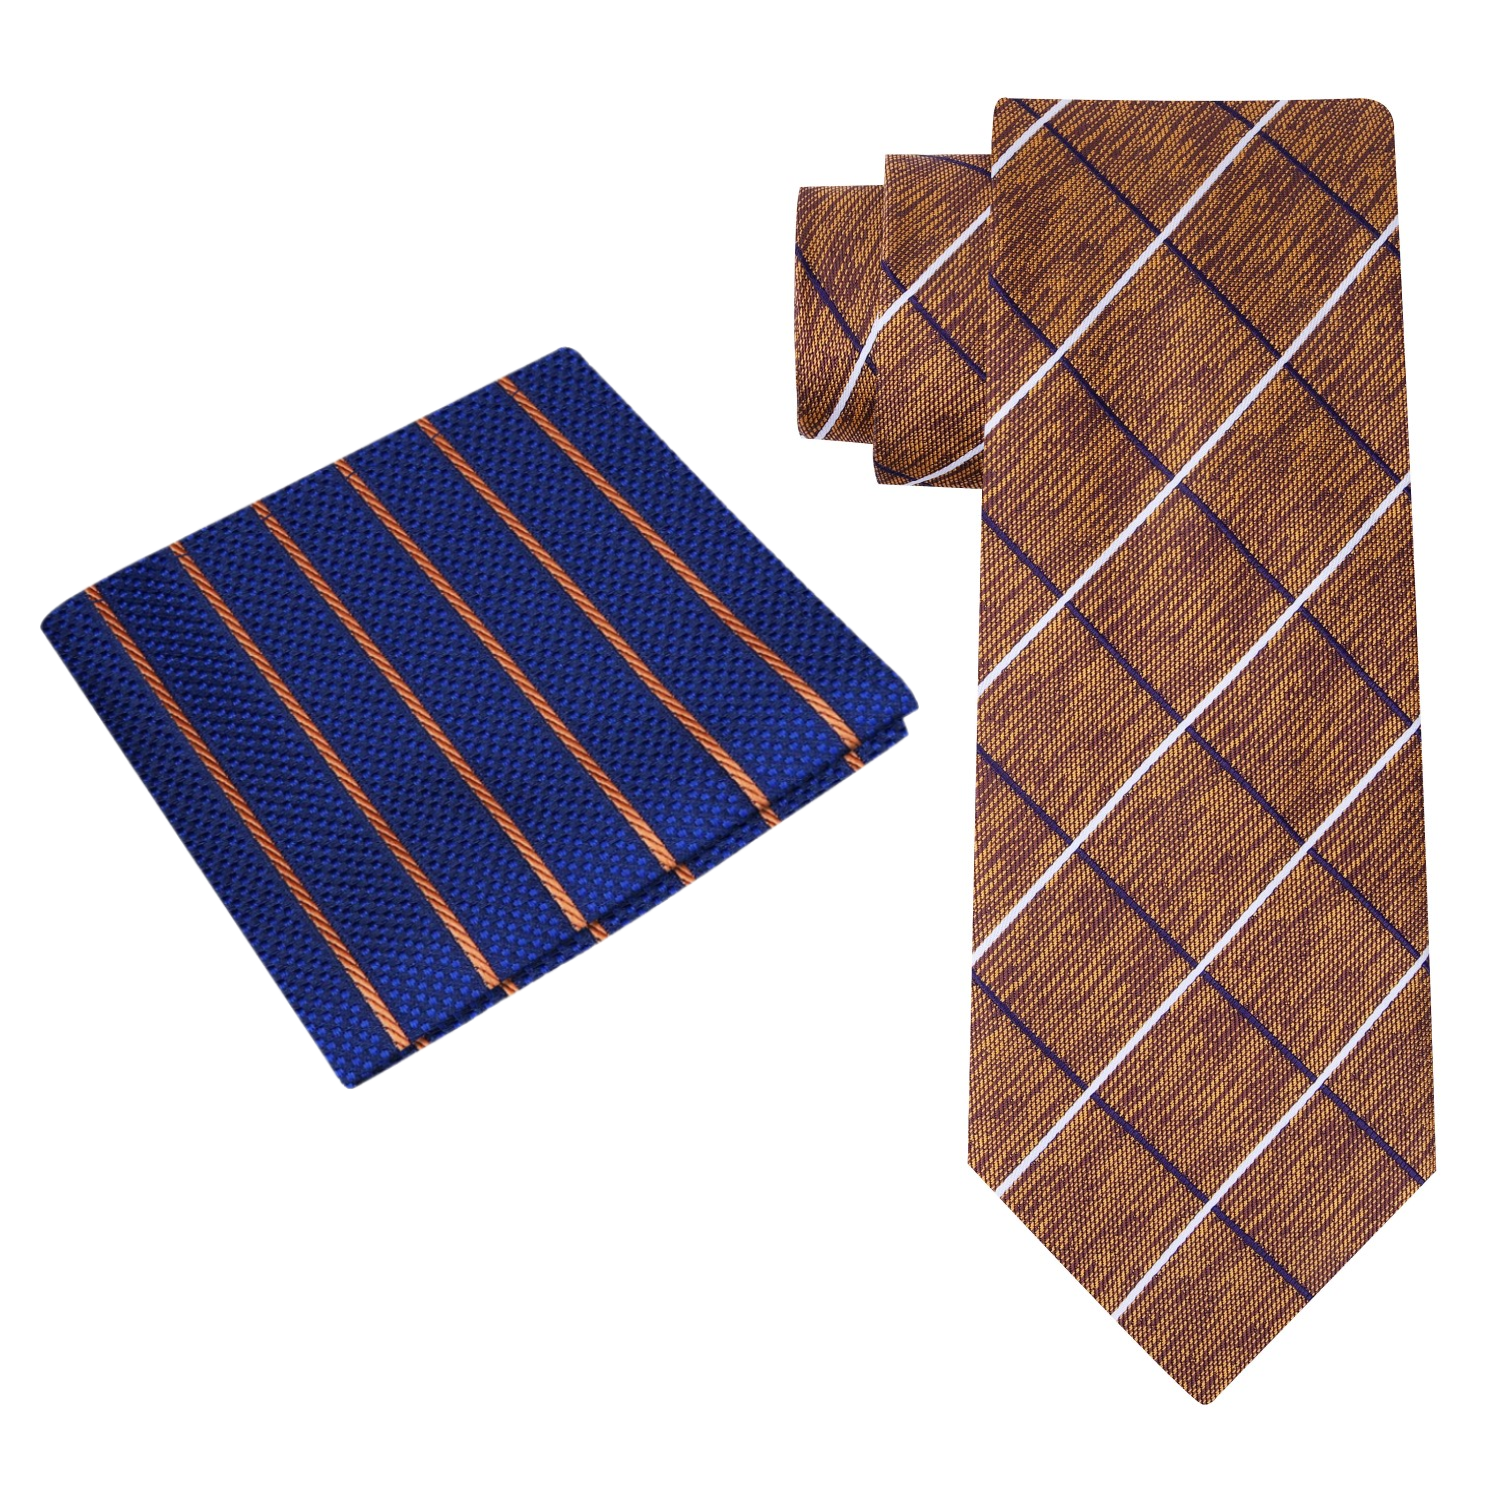 Alt: Brown Classic Man Plaid Necktie and Accenting Square